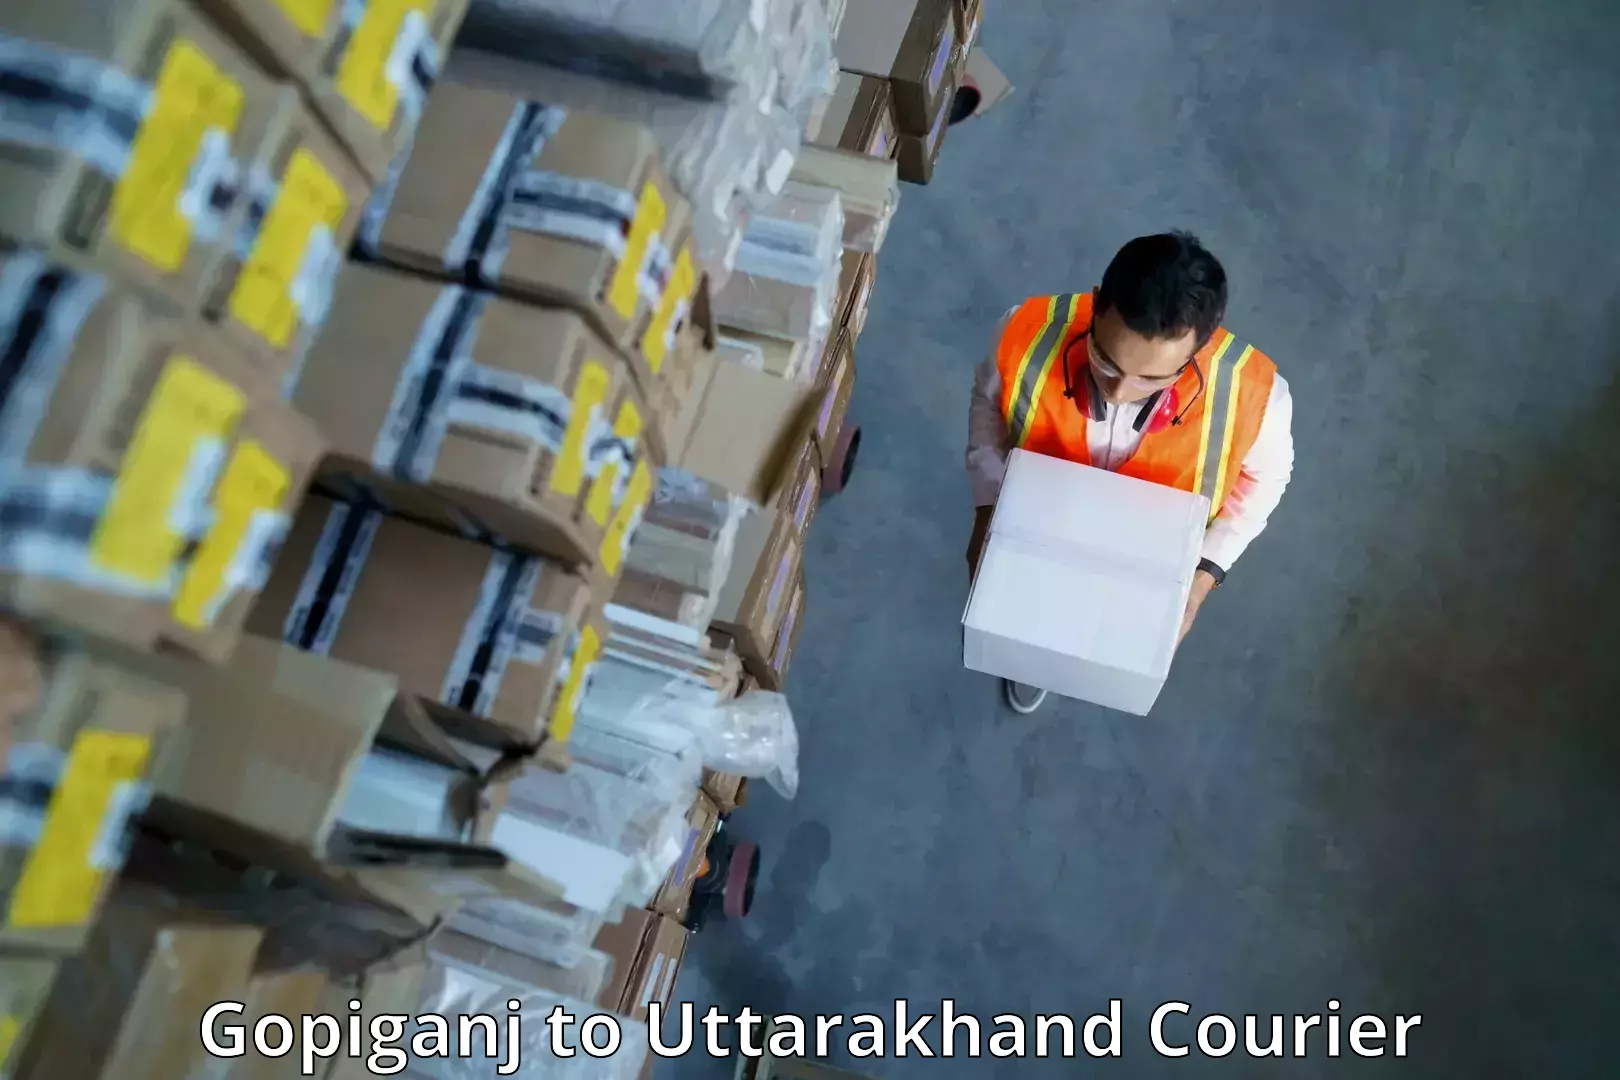 High-performance logistics Gopiganj to Rudraprayag